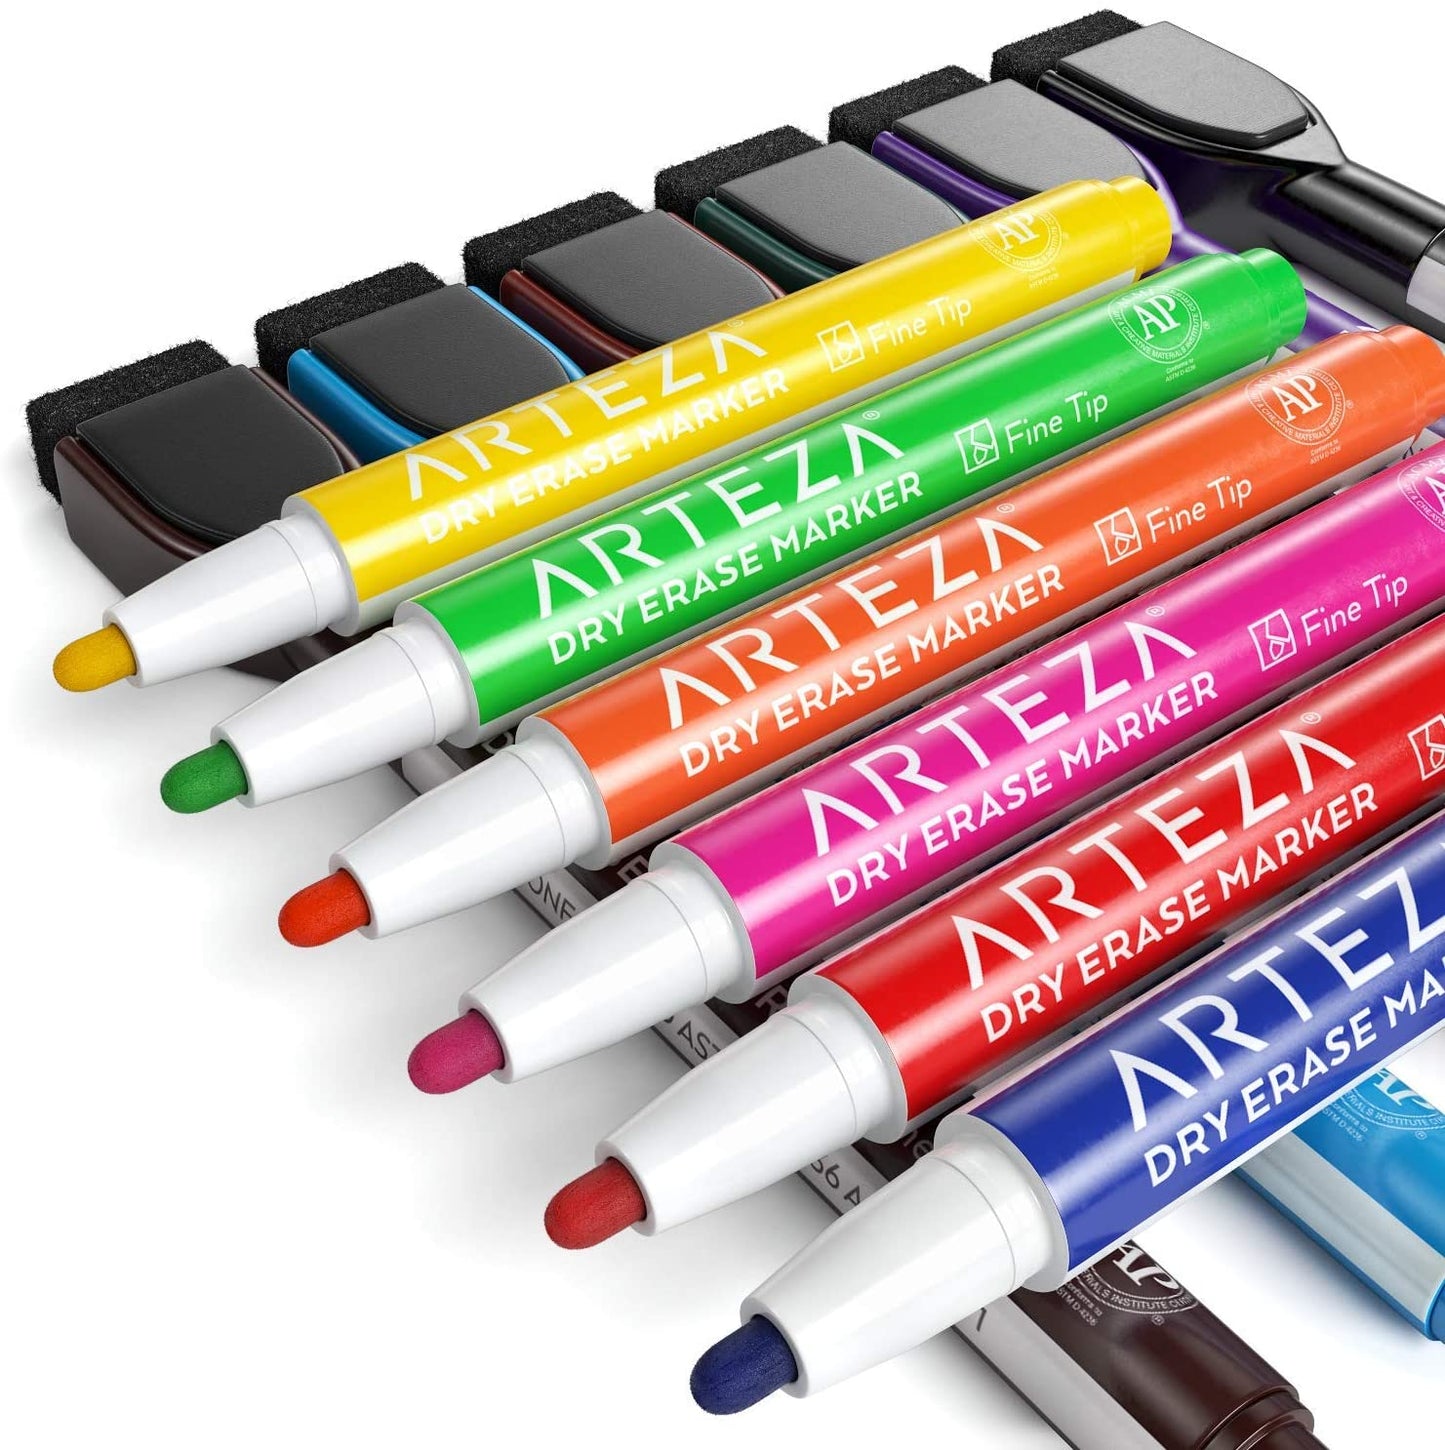 Dry Erase Markers with Magnetic Eraser Caps, Fine Tip - Set of 24